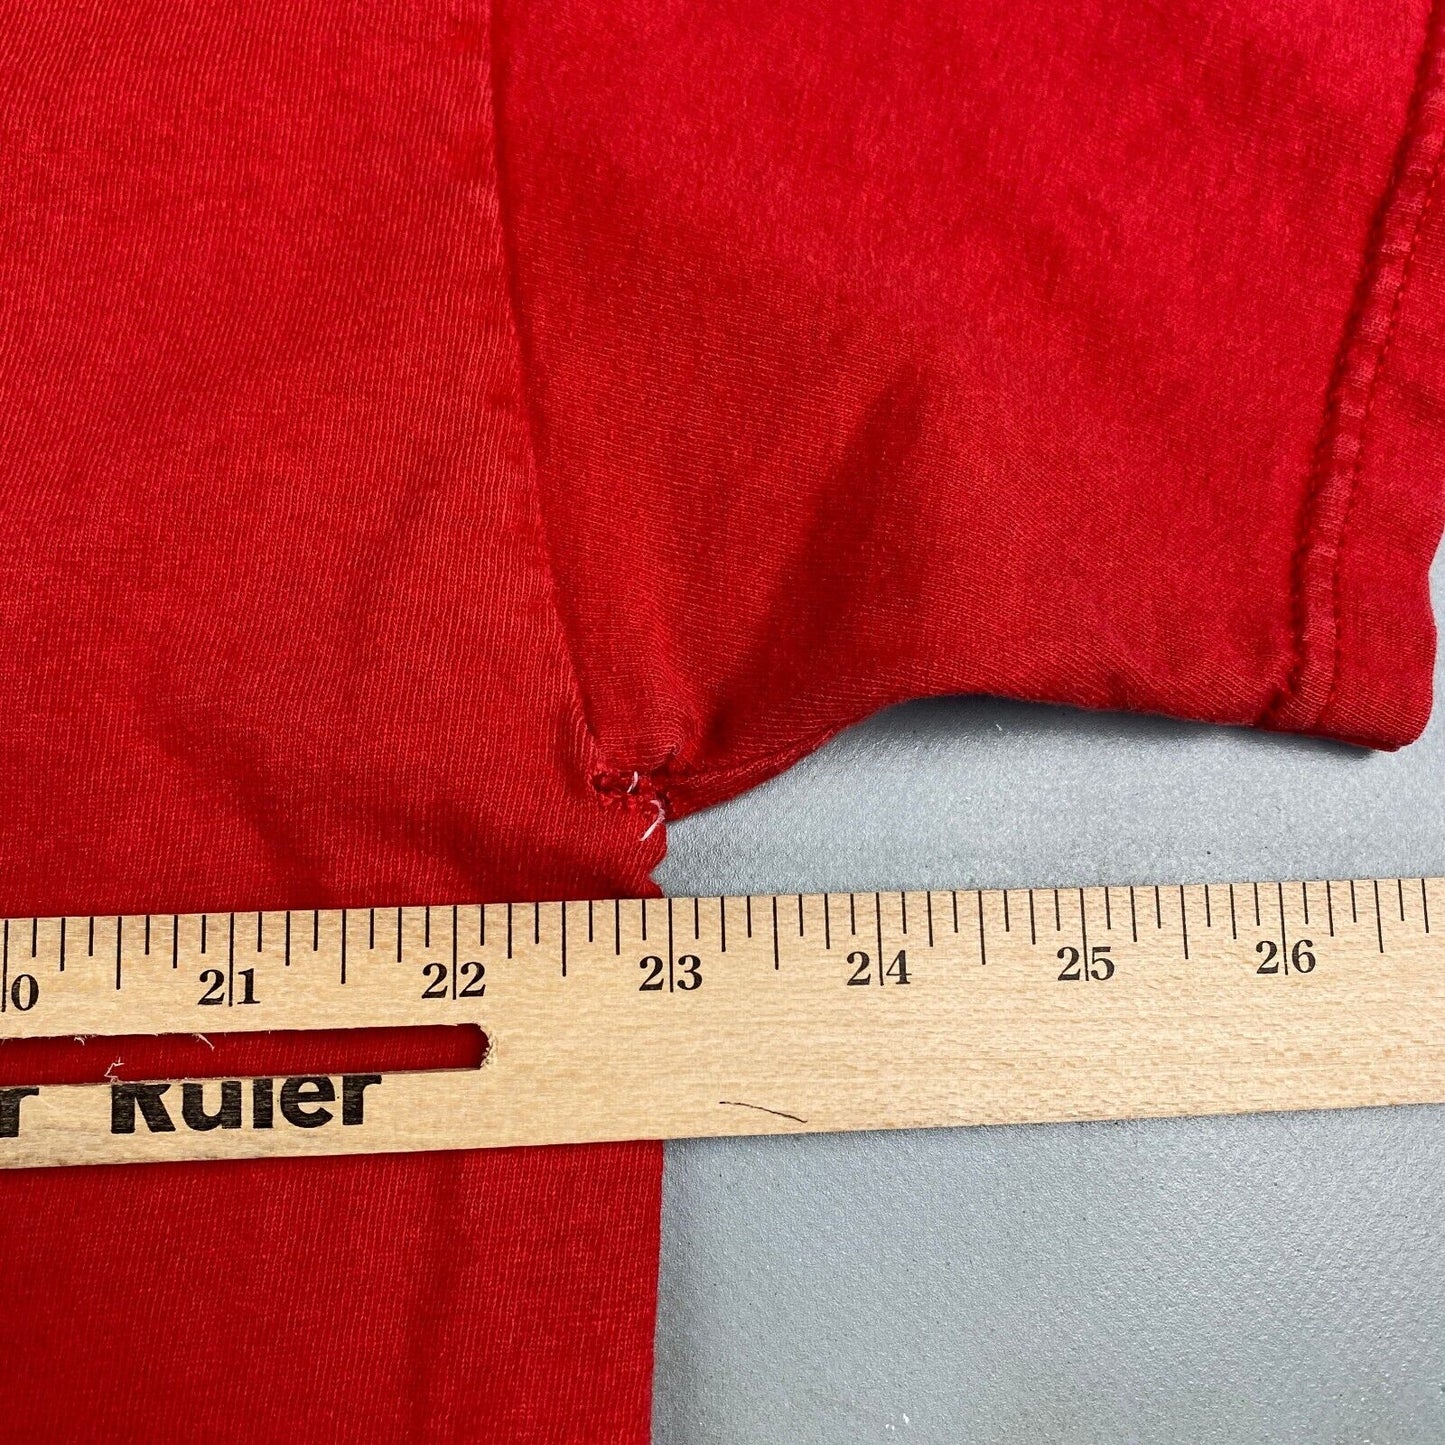 VINTAGE Kool-Aid Big Logo Red T-Shirt sz XL Men Adult